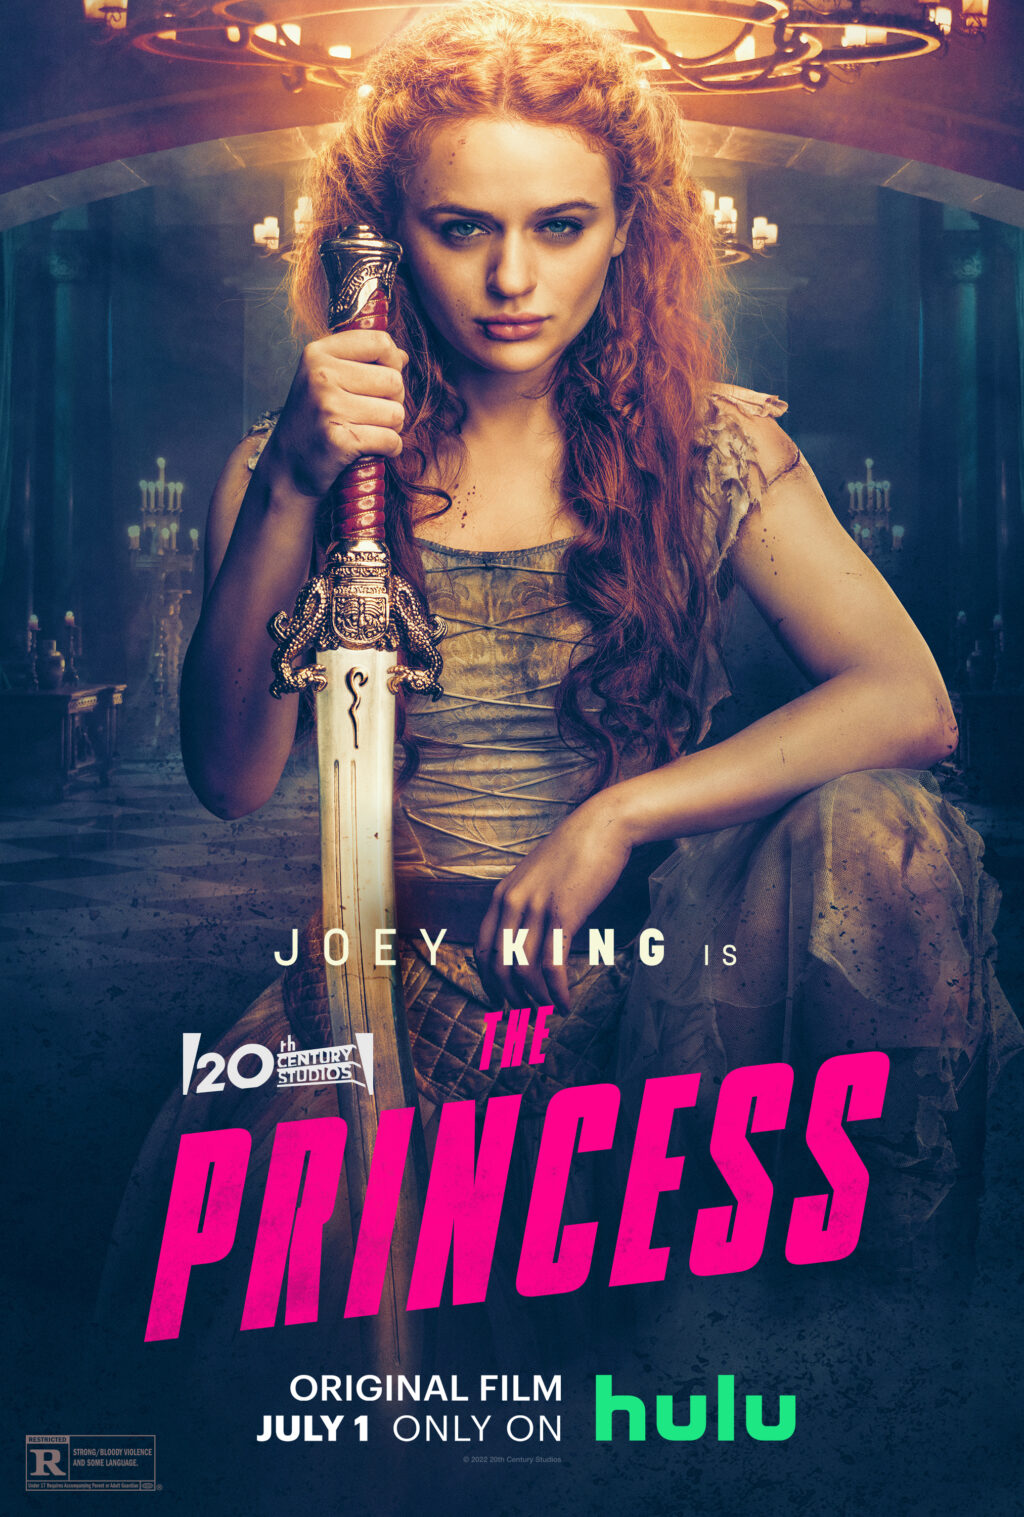 ICYMI: The Princess Trailer